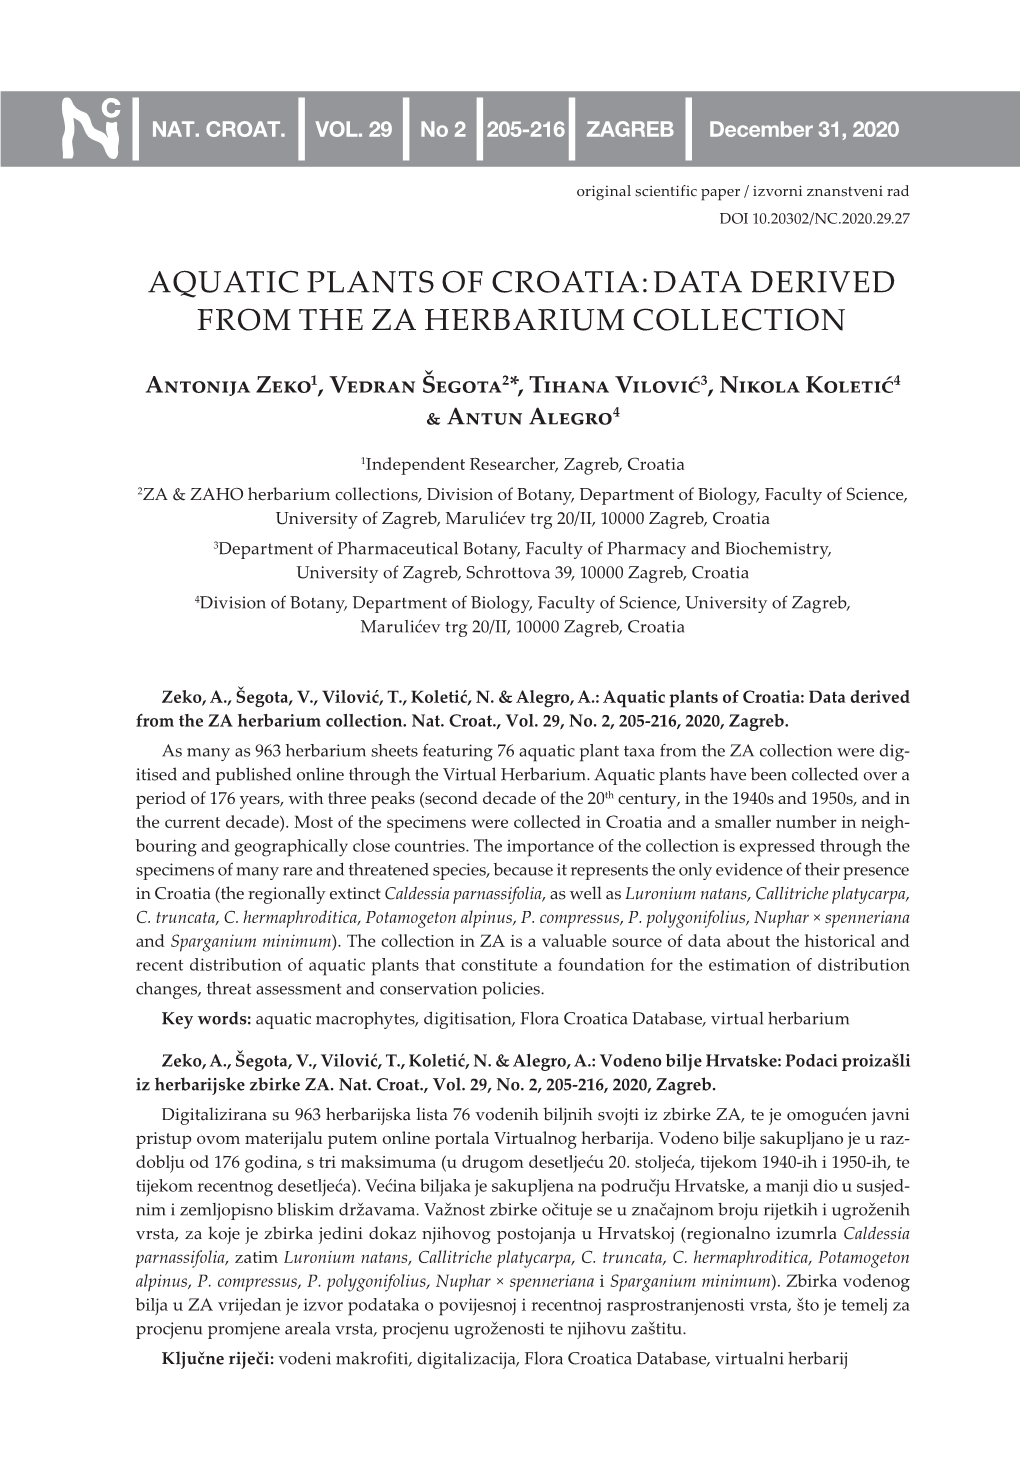 Aquatic Plants of Croatia: Data Derived from the Za Herbarium Collection